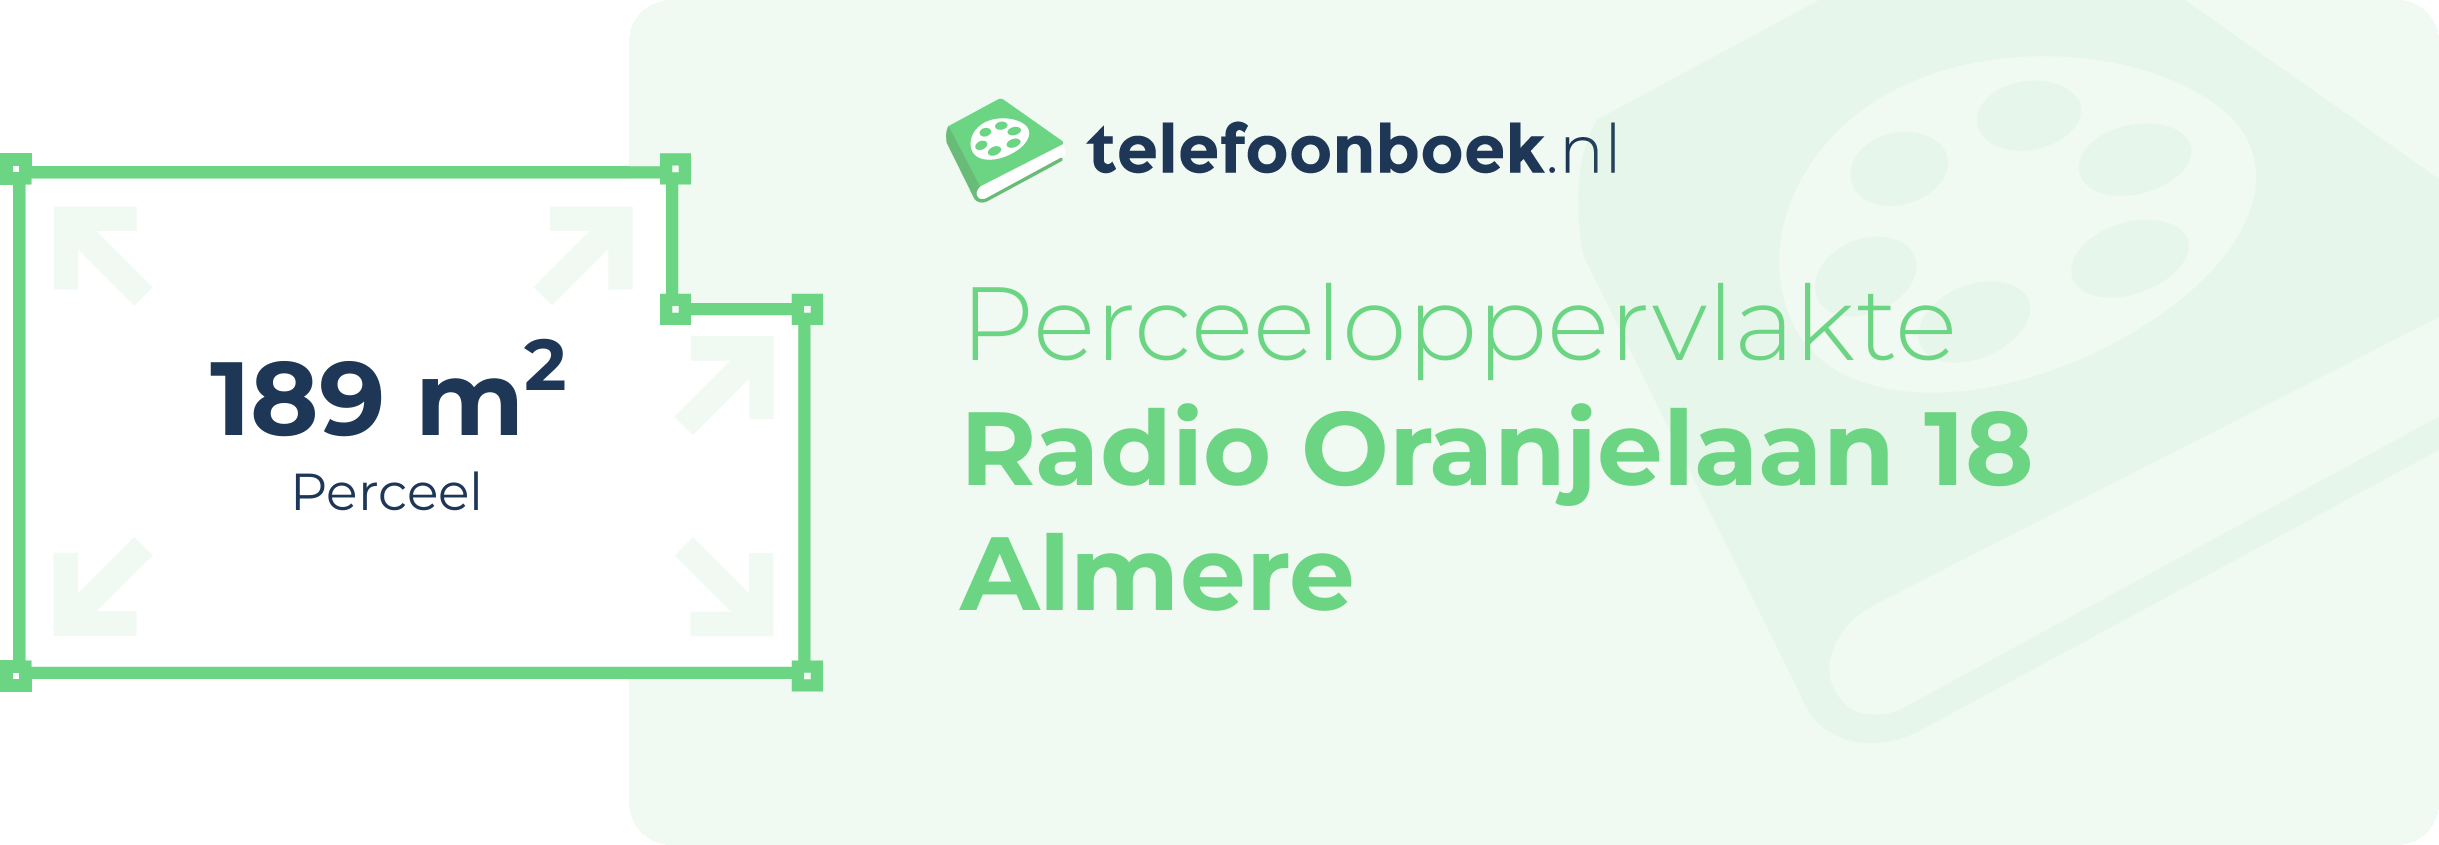 Perceeloppervlakte Radio Oranjelaan 18 Almere